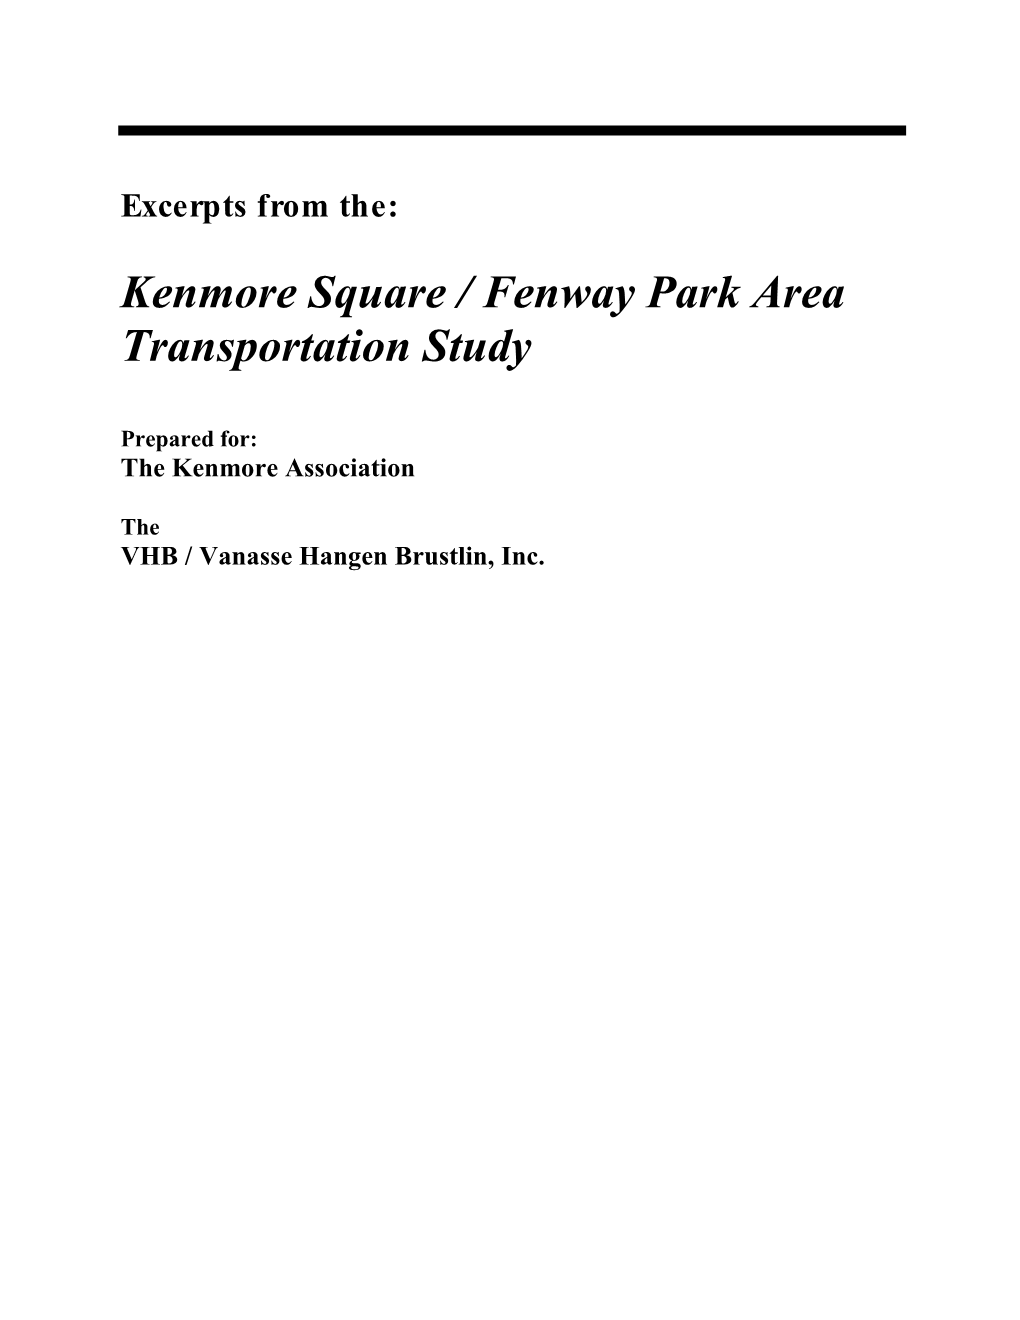 Kenmore Square / Fenway Park Area Transportation Study